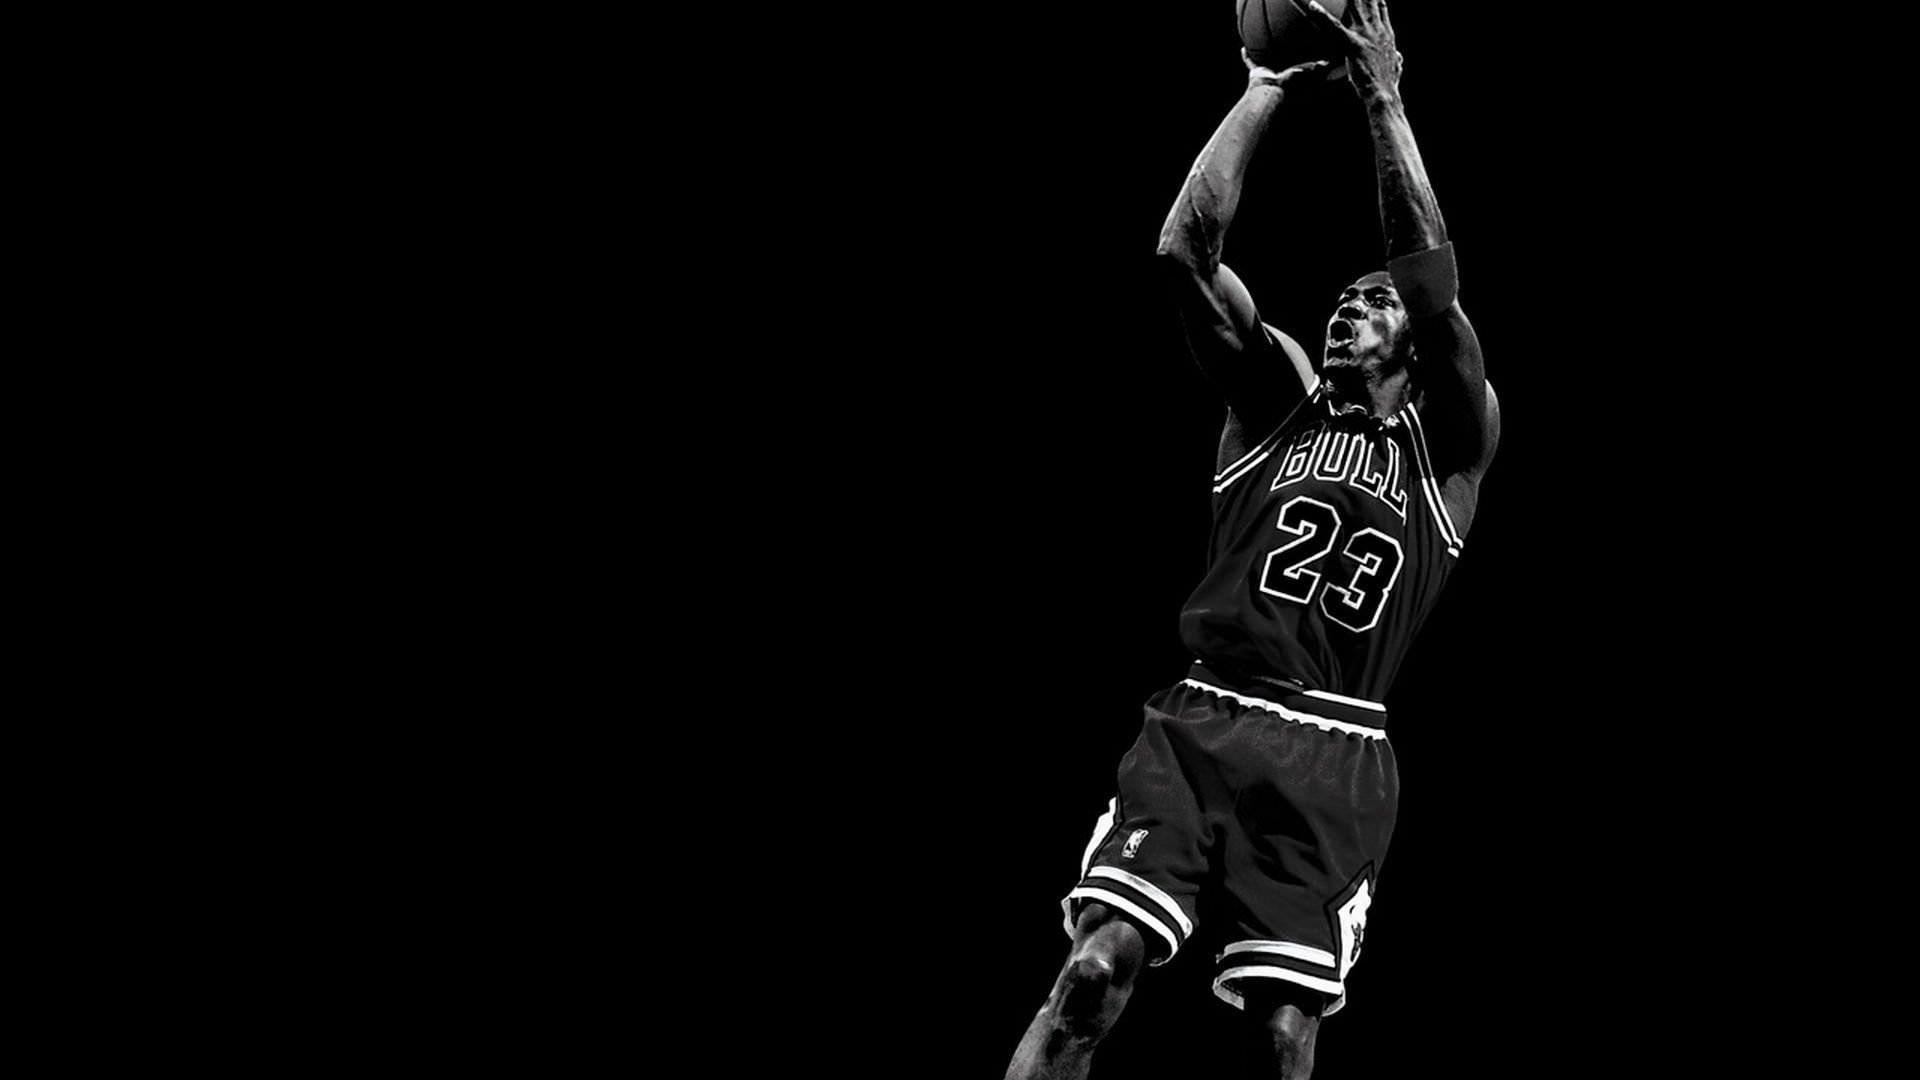 Michael Jordan wallpaper 1920x1080 Full HD (1080p) desktop background